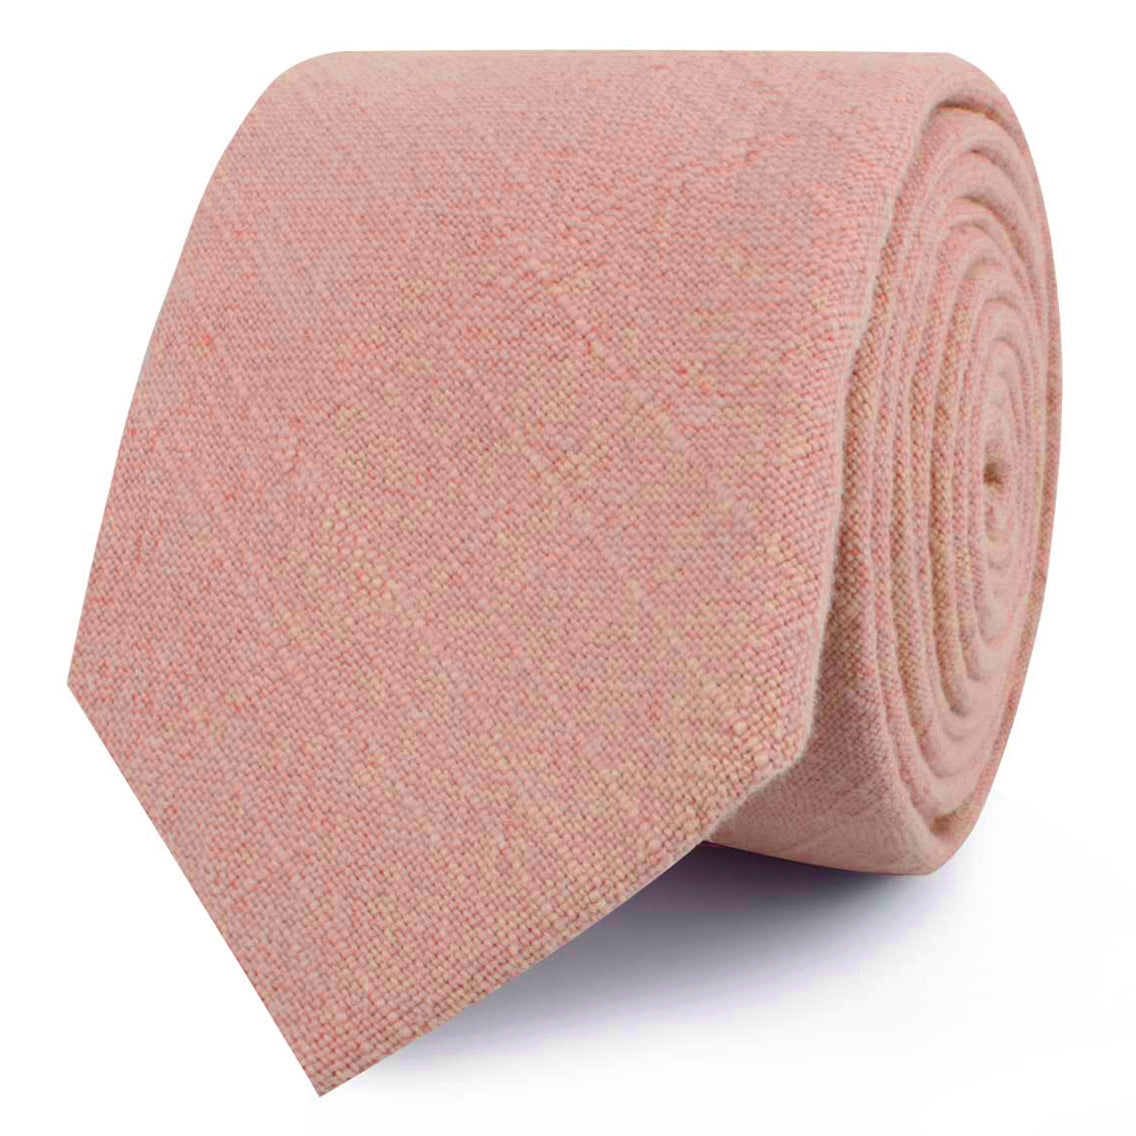 Paris Blush Pink Textured Vintage Linen Skinny Ties